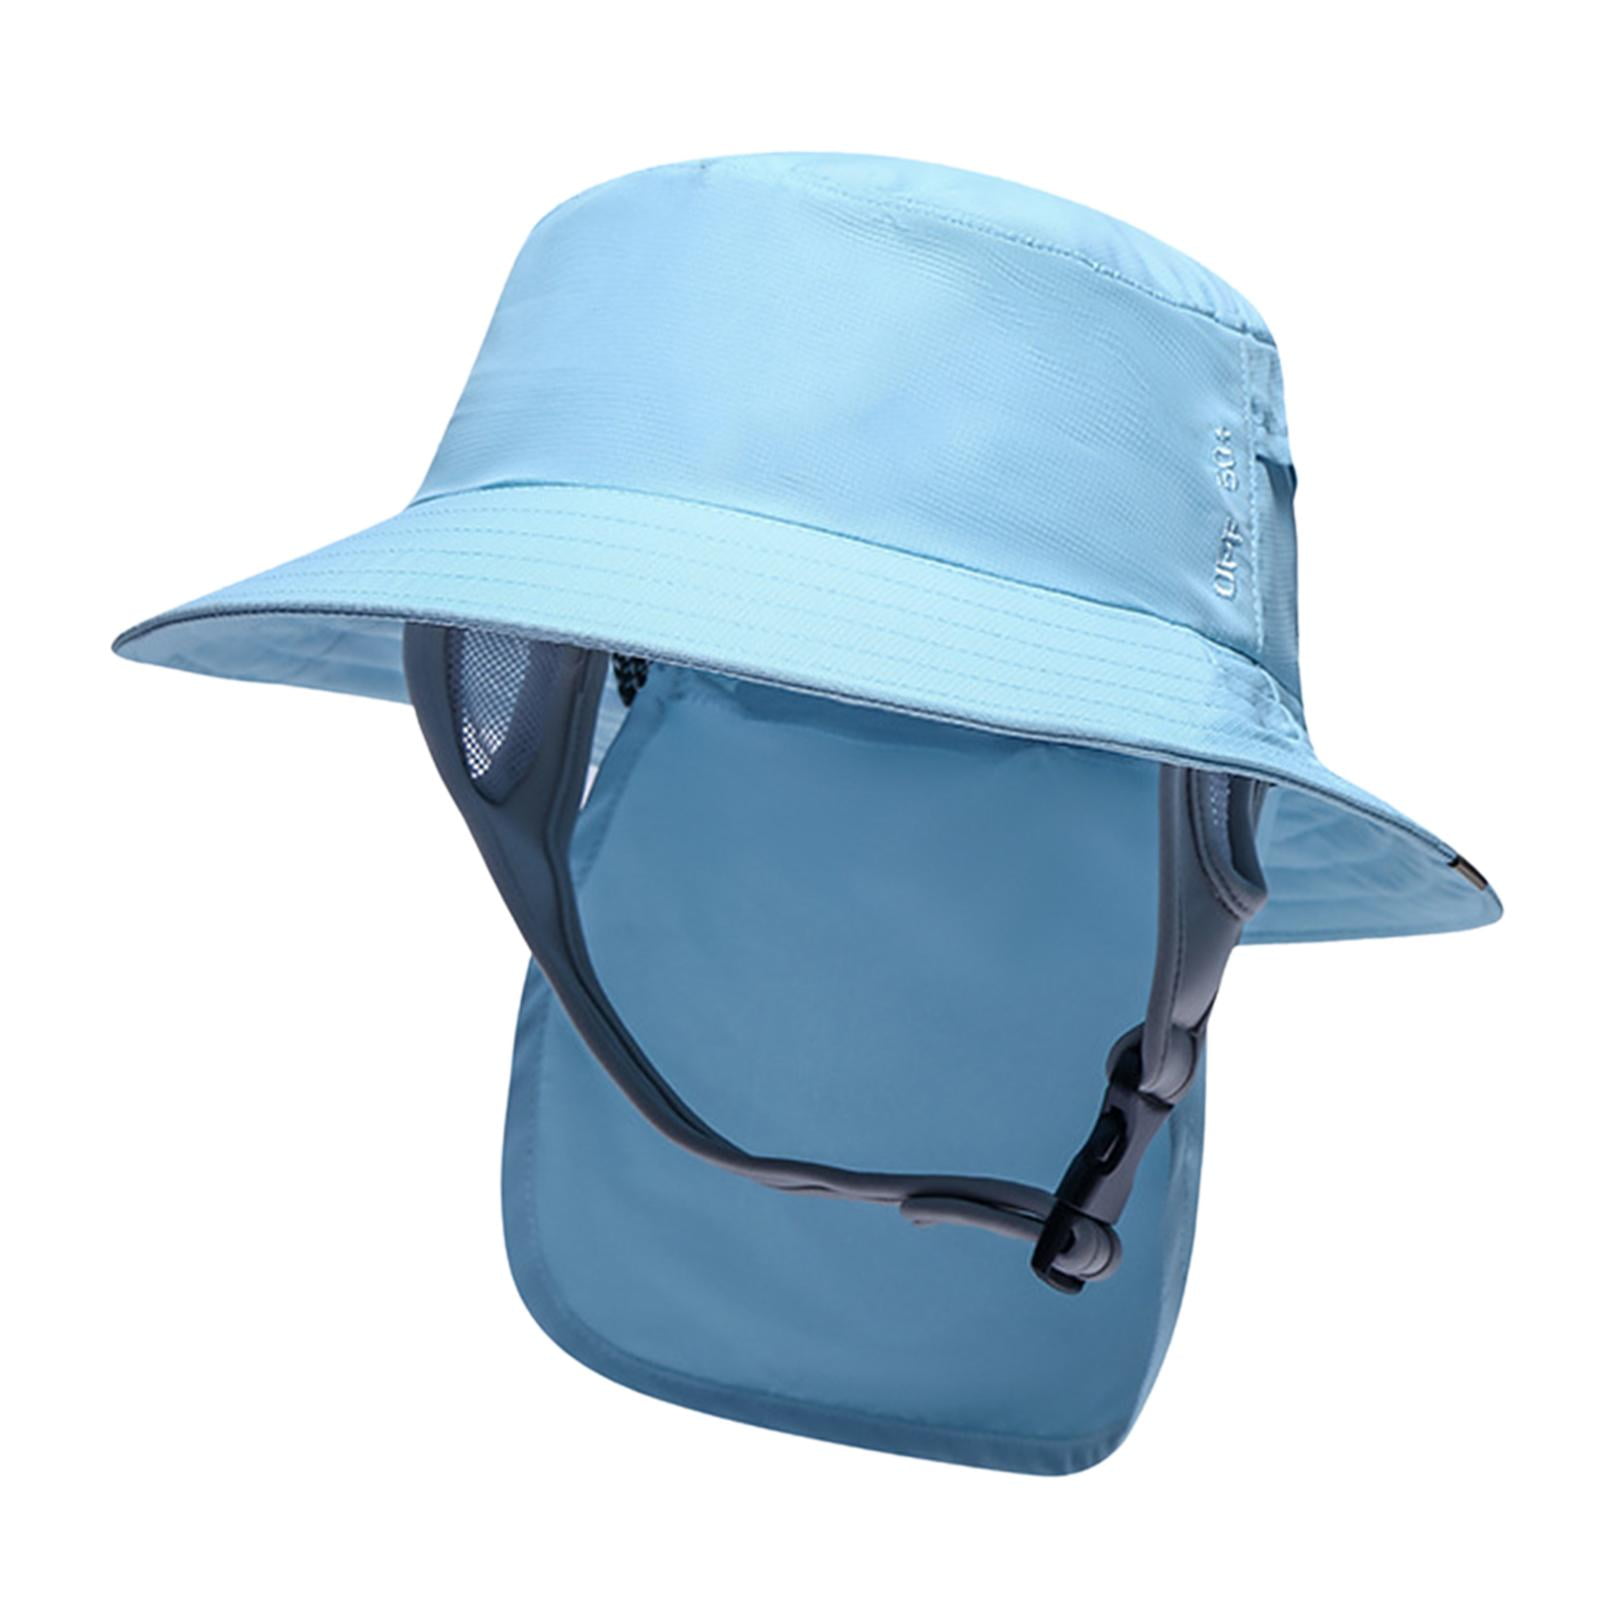 J Hats Fishing Bucket Hat Cap OS With Chin Strap Blue Denim & Gray Cotton  Maui